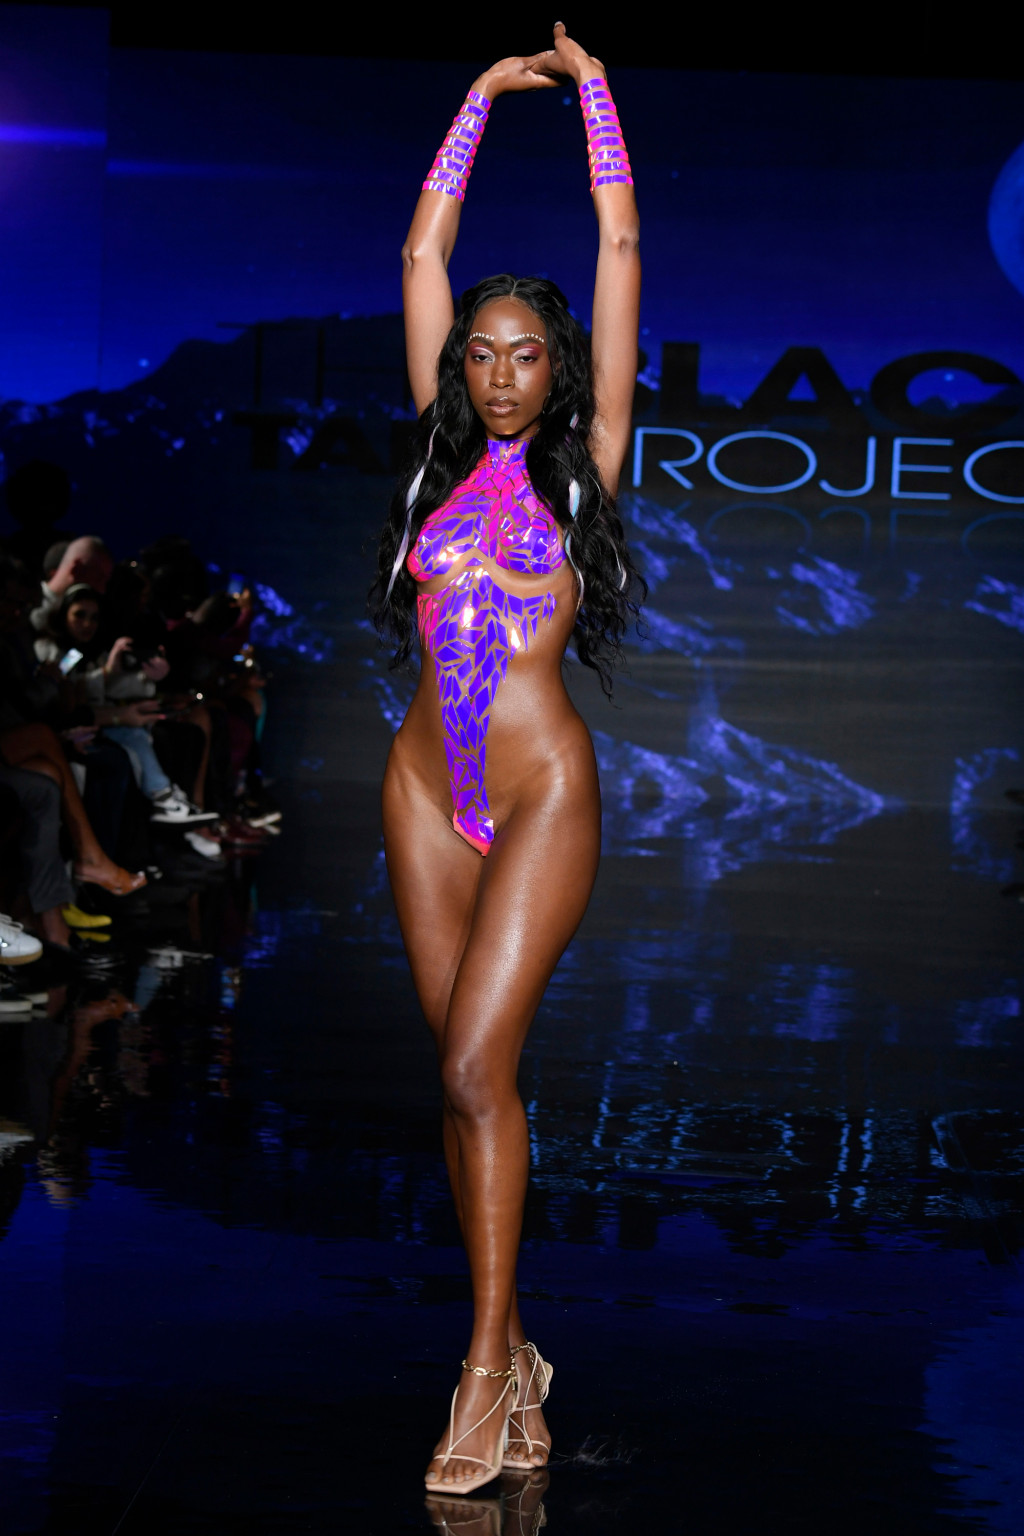 Swimsuit Models Dazzle Catwalk In Bikinis Made Of Tape